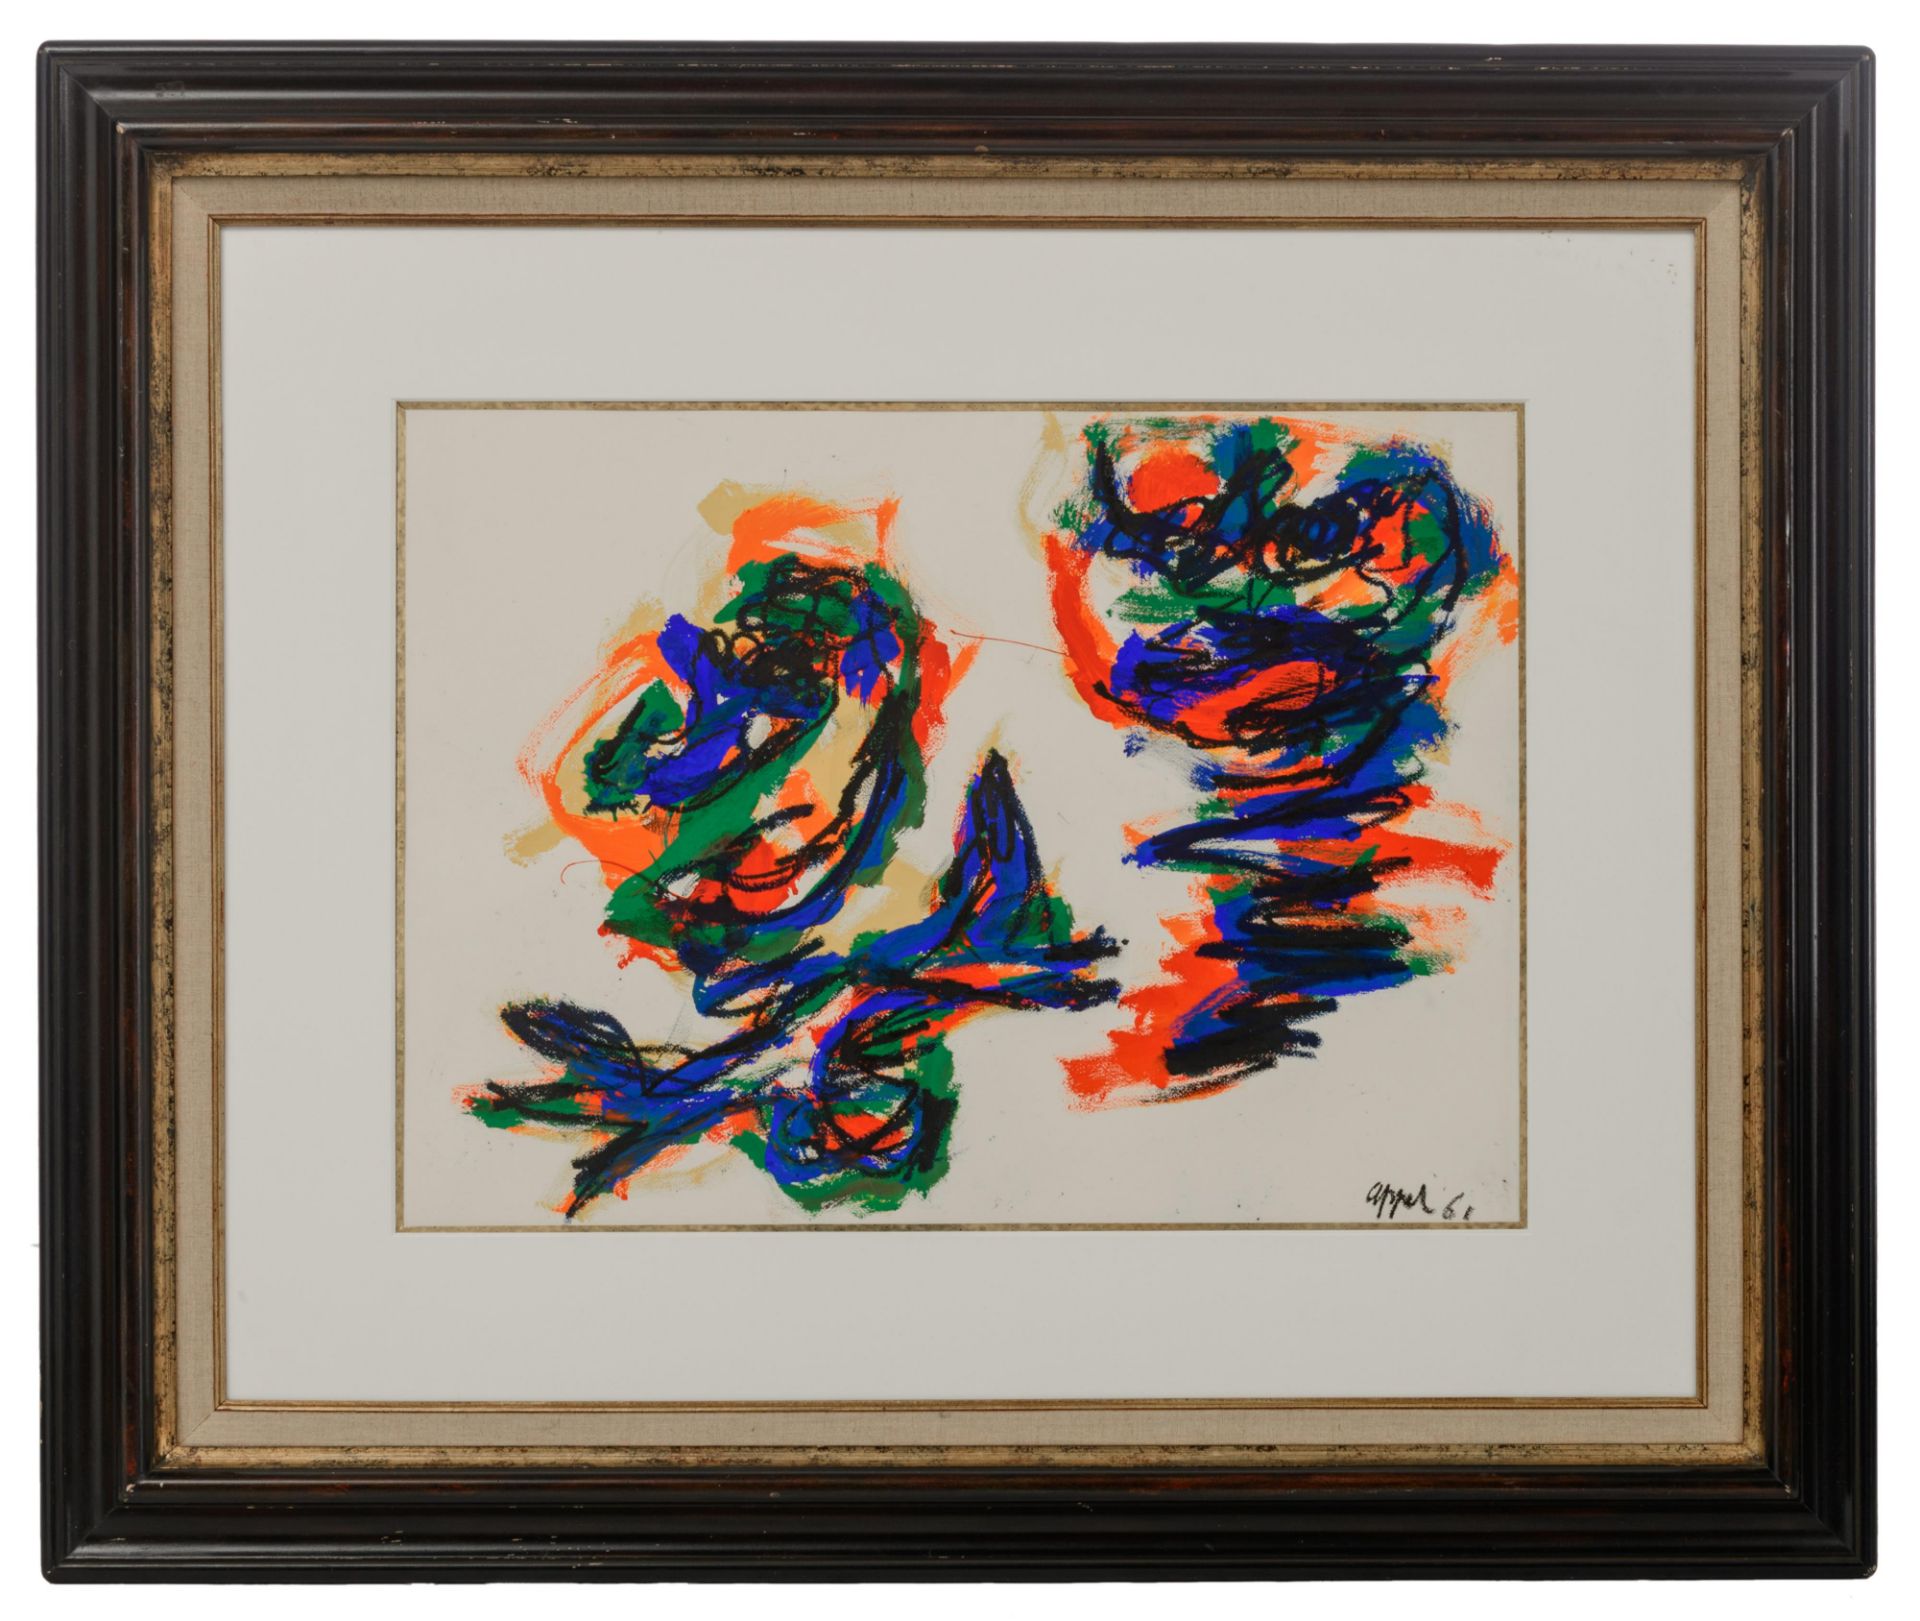 Karel Appel (1921-2006), 'Two Figures', 1961, 55 x 76 cm - Image 2 of 11